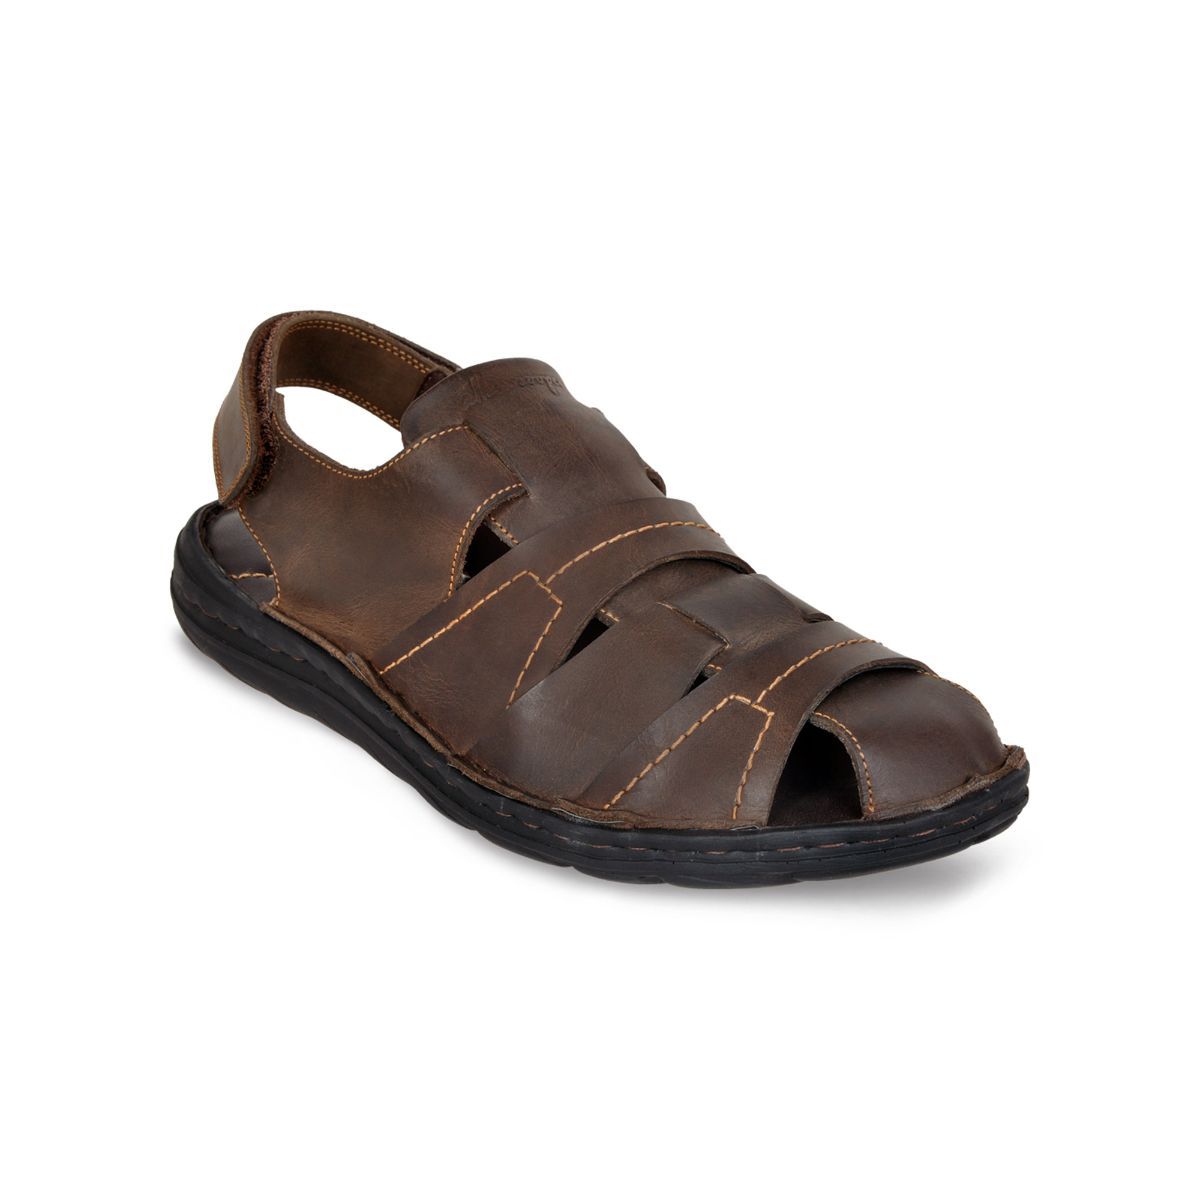 Allen Cooper Brown Leather Sandals - 10